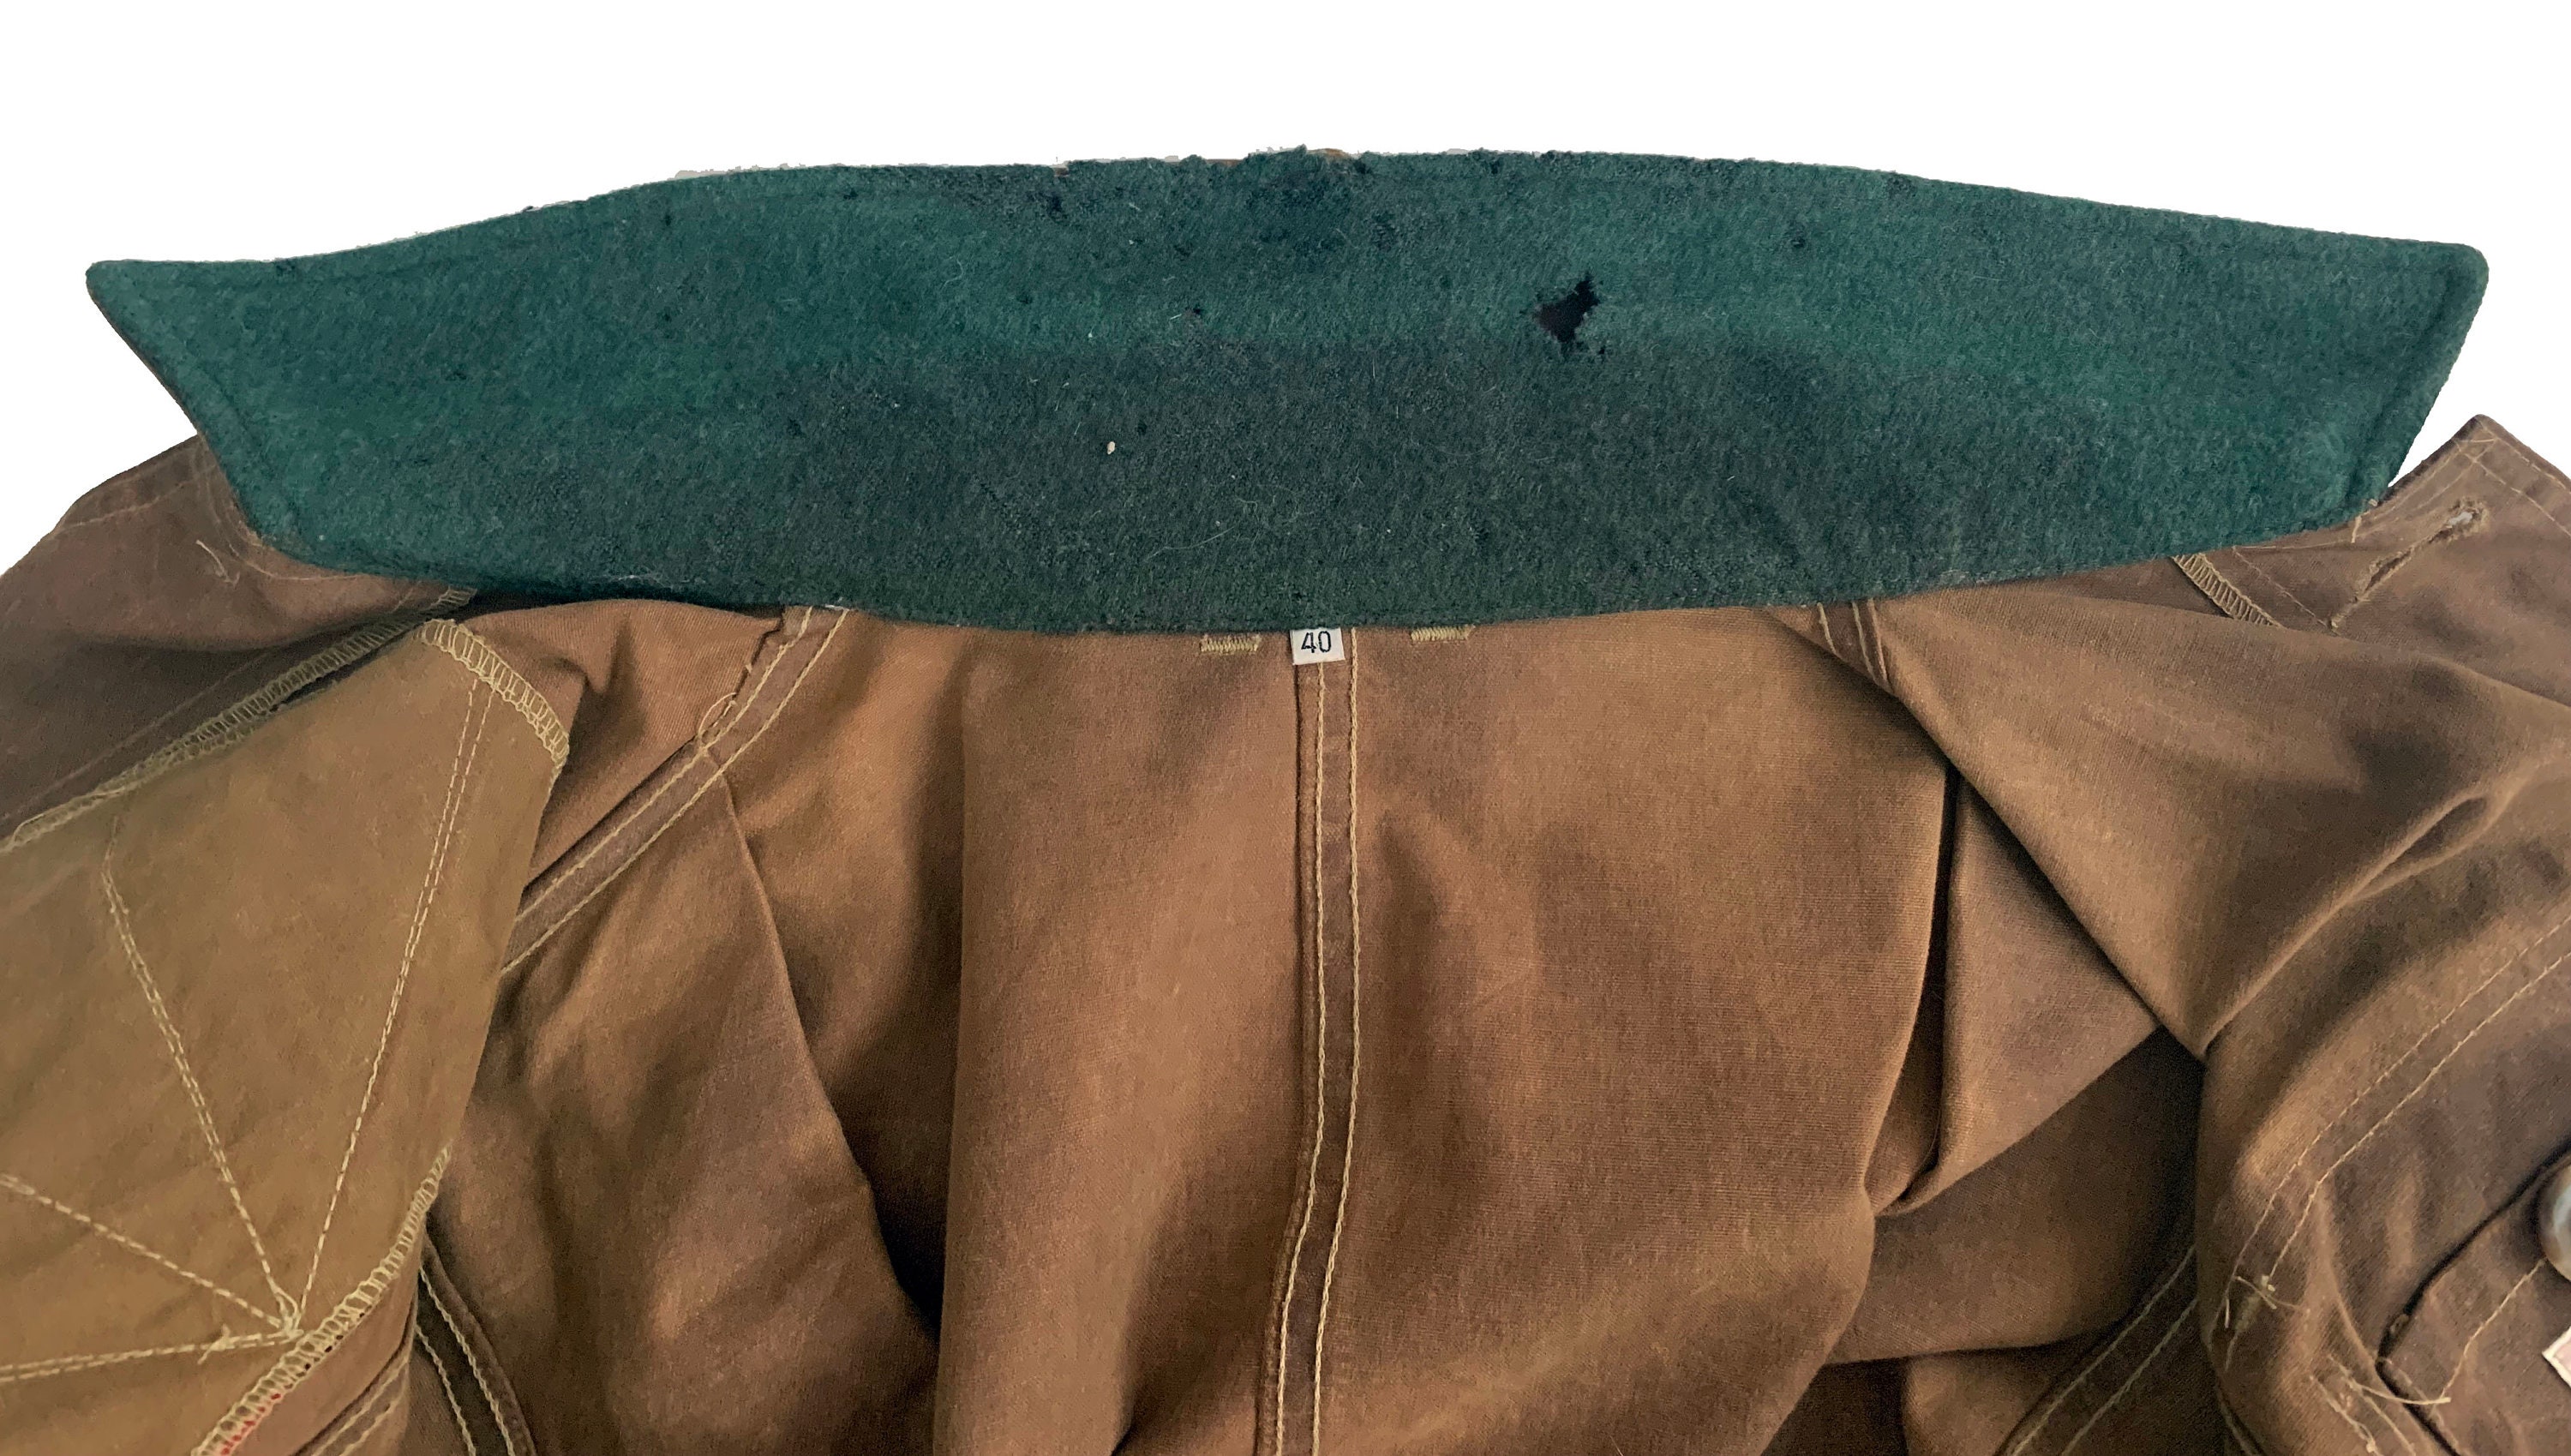 Vintage Filson Waxed Work Wear Hunting Jacket Tan XL